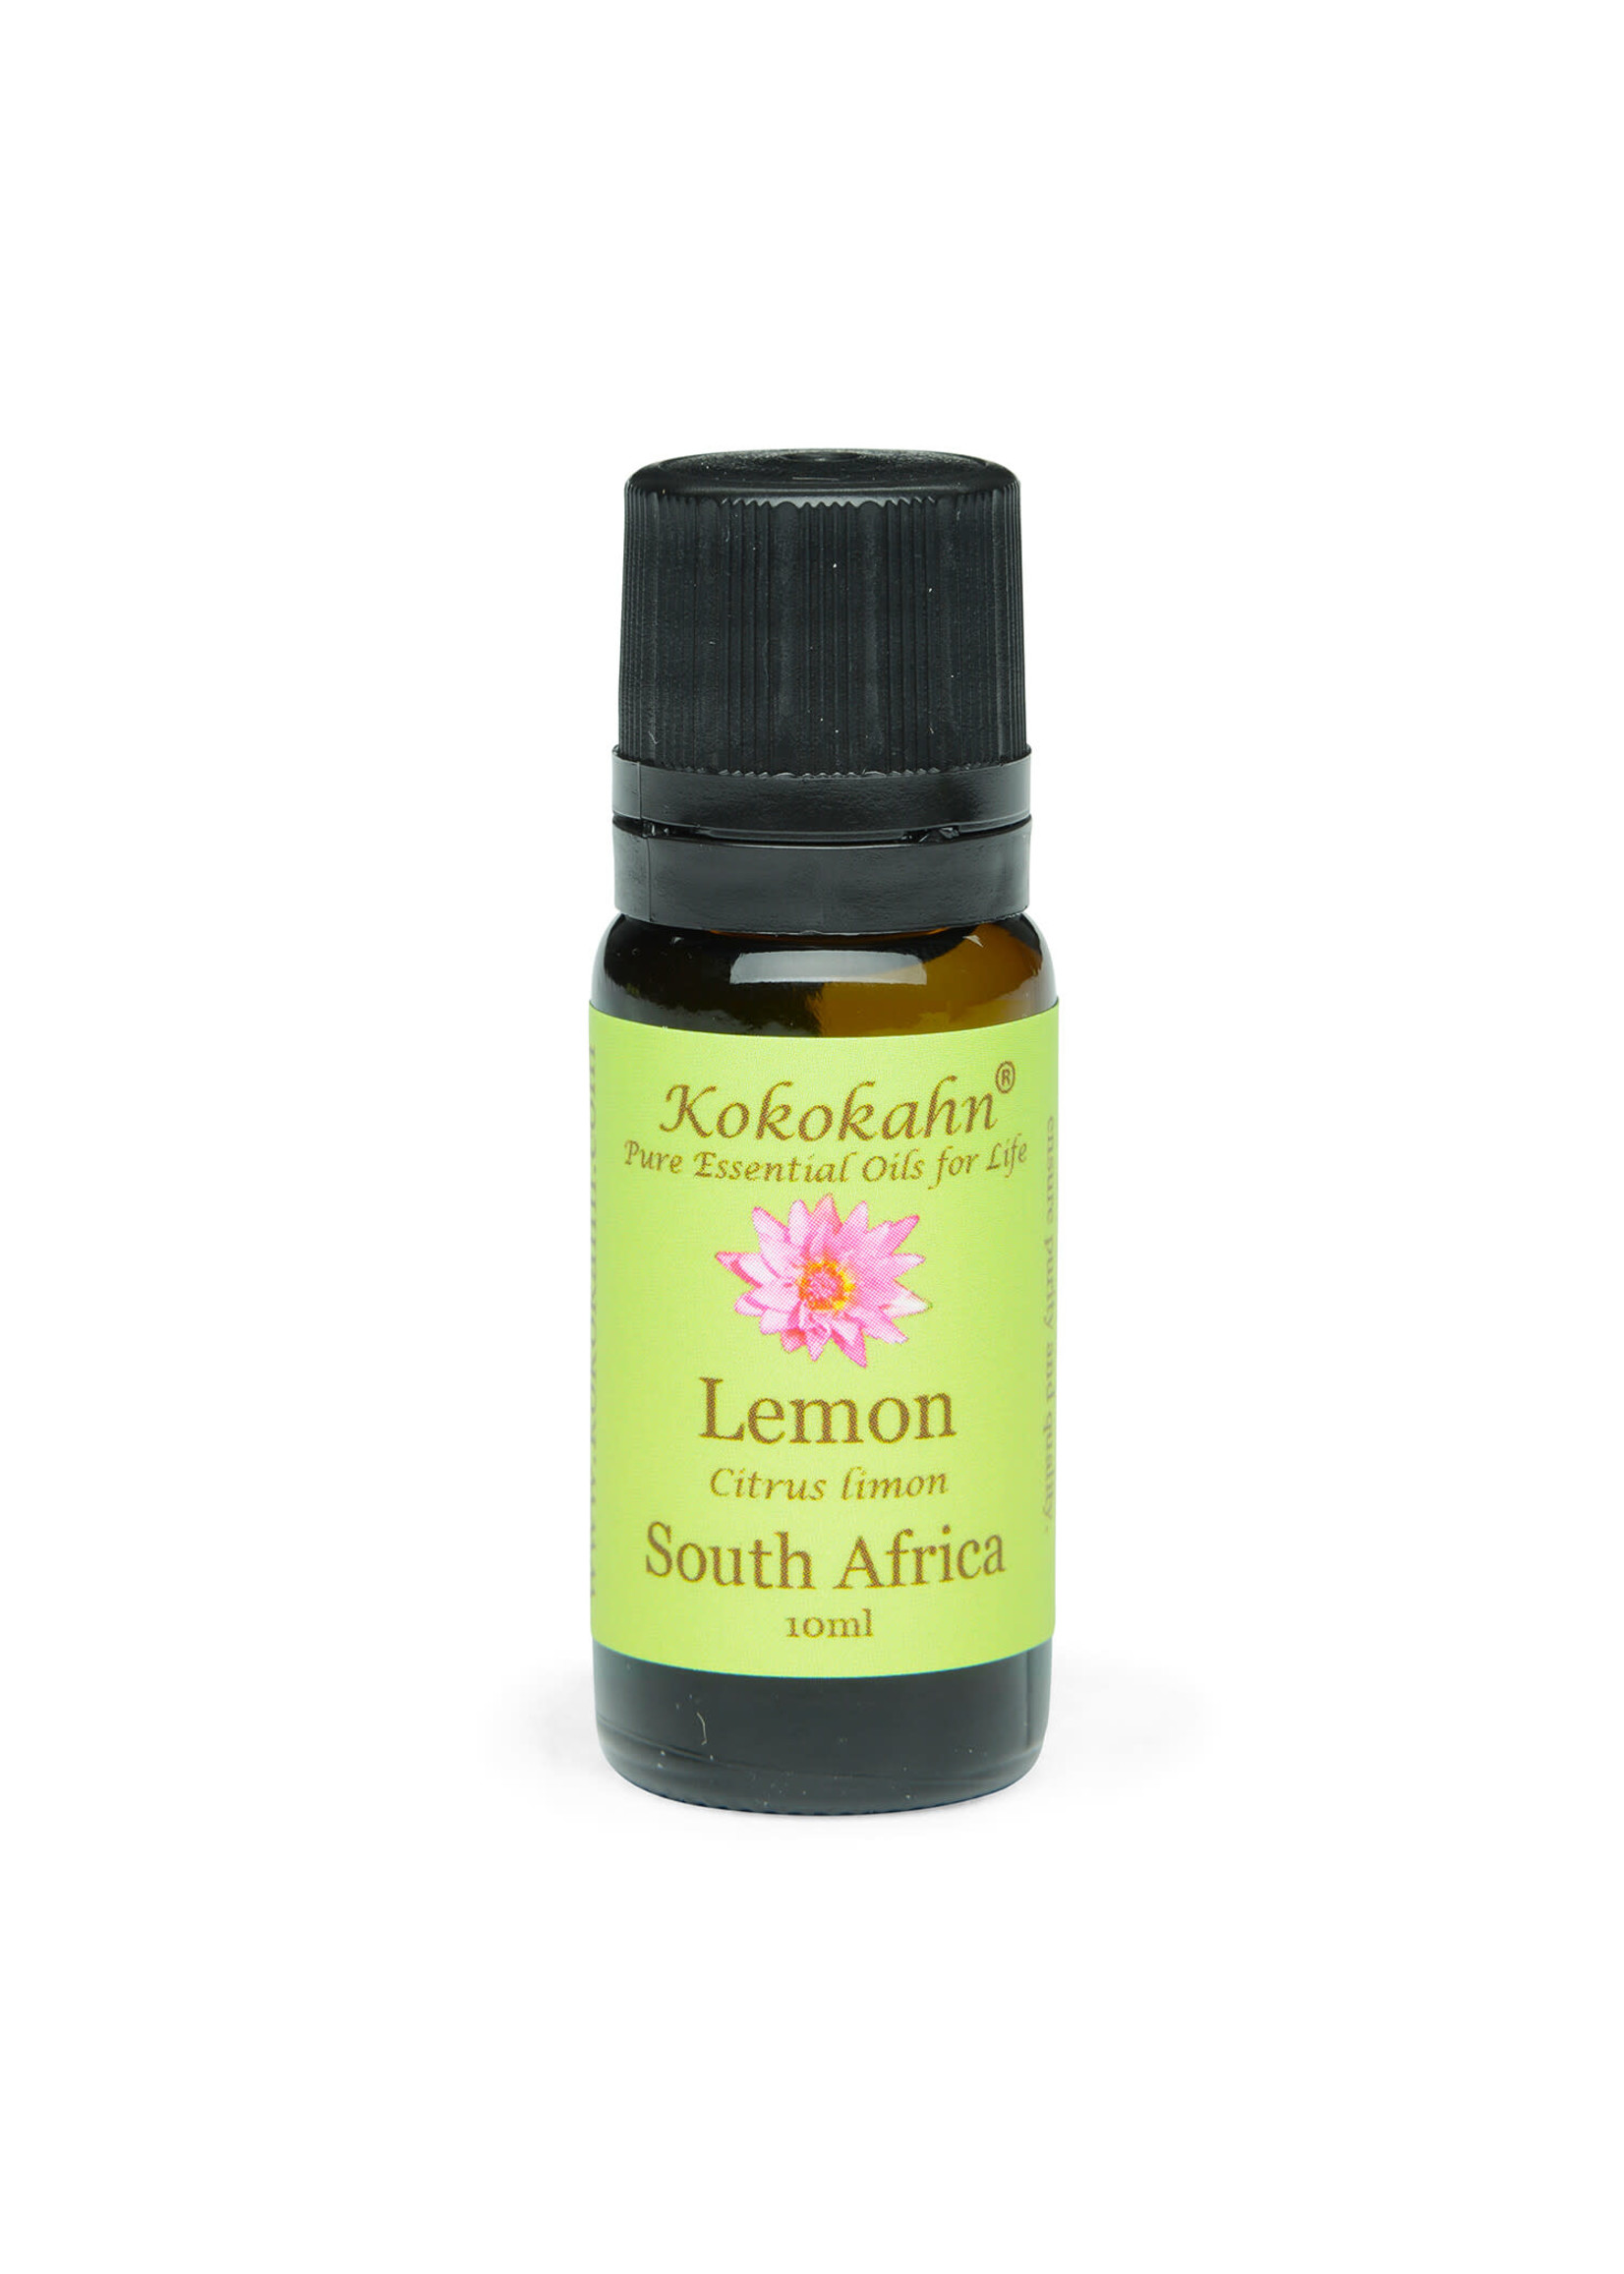 Kokokahn Lemon Essential Oil